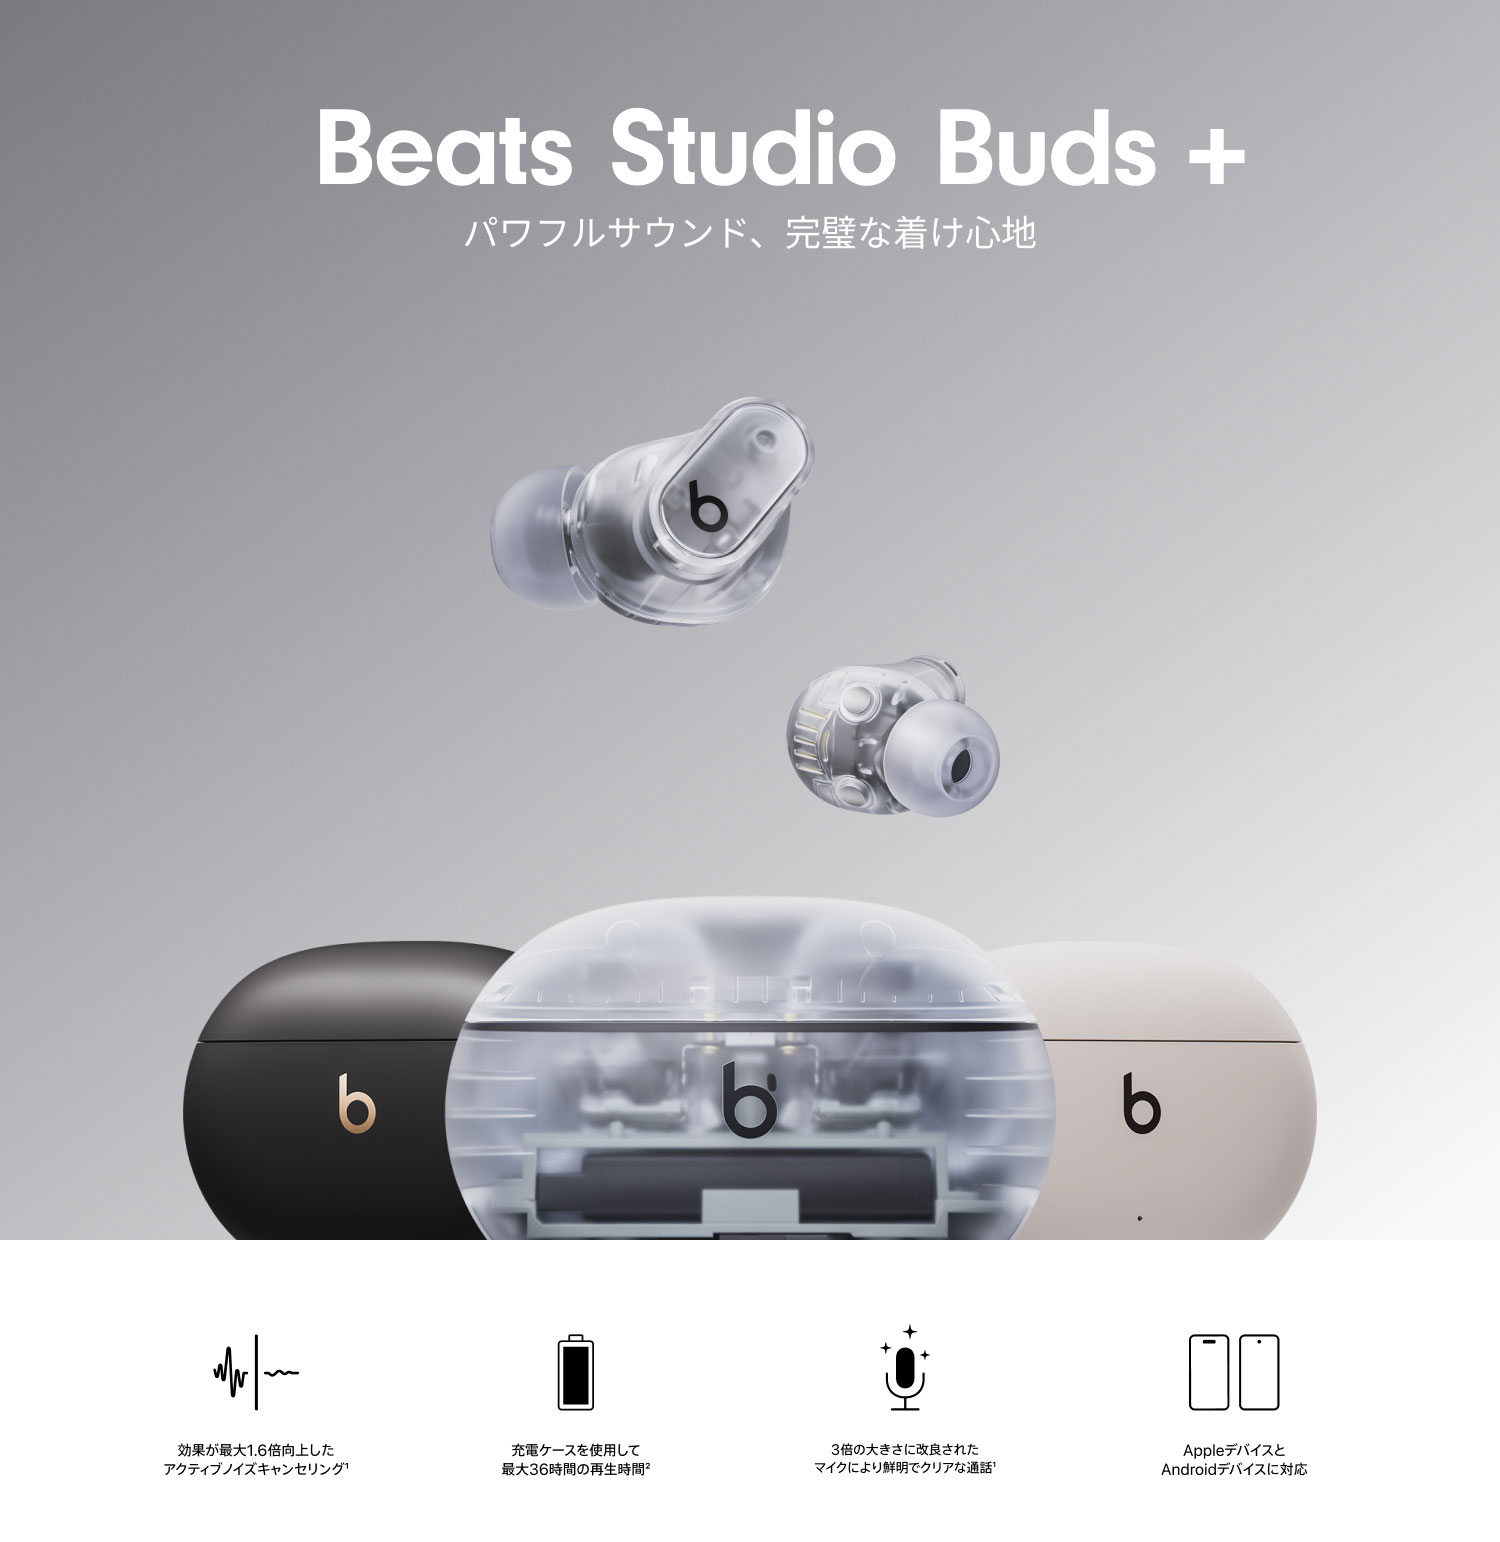 Beats Studio Buds plus